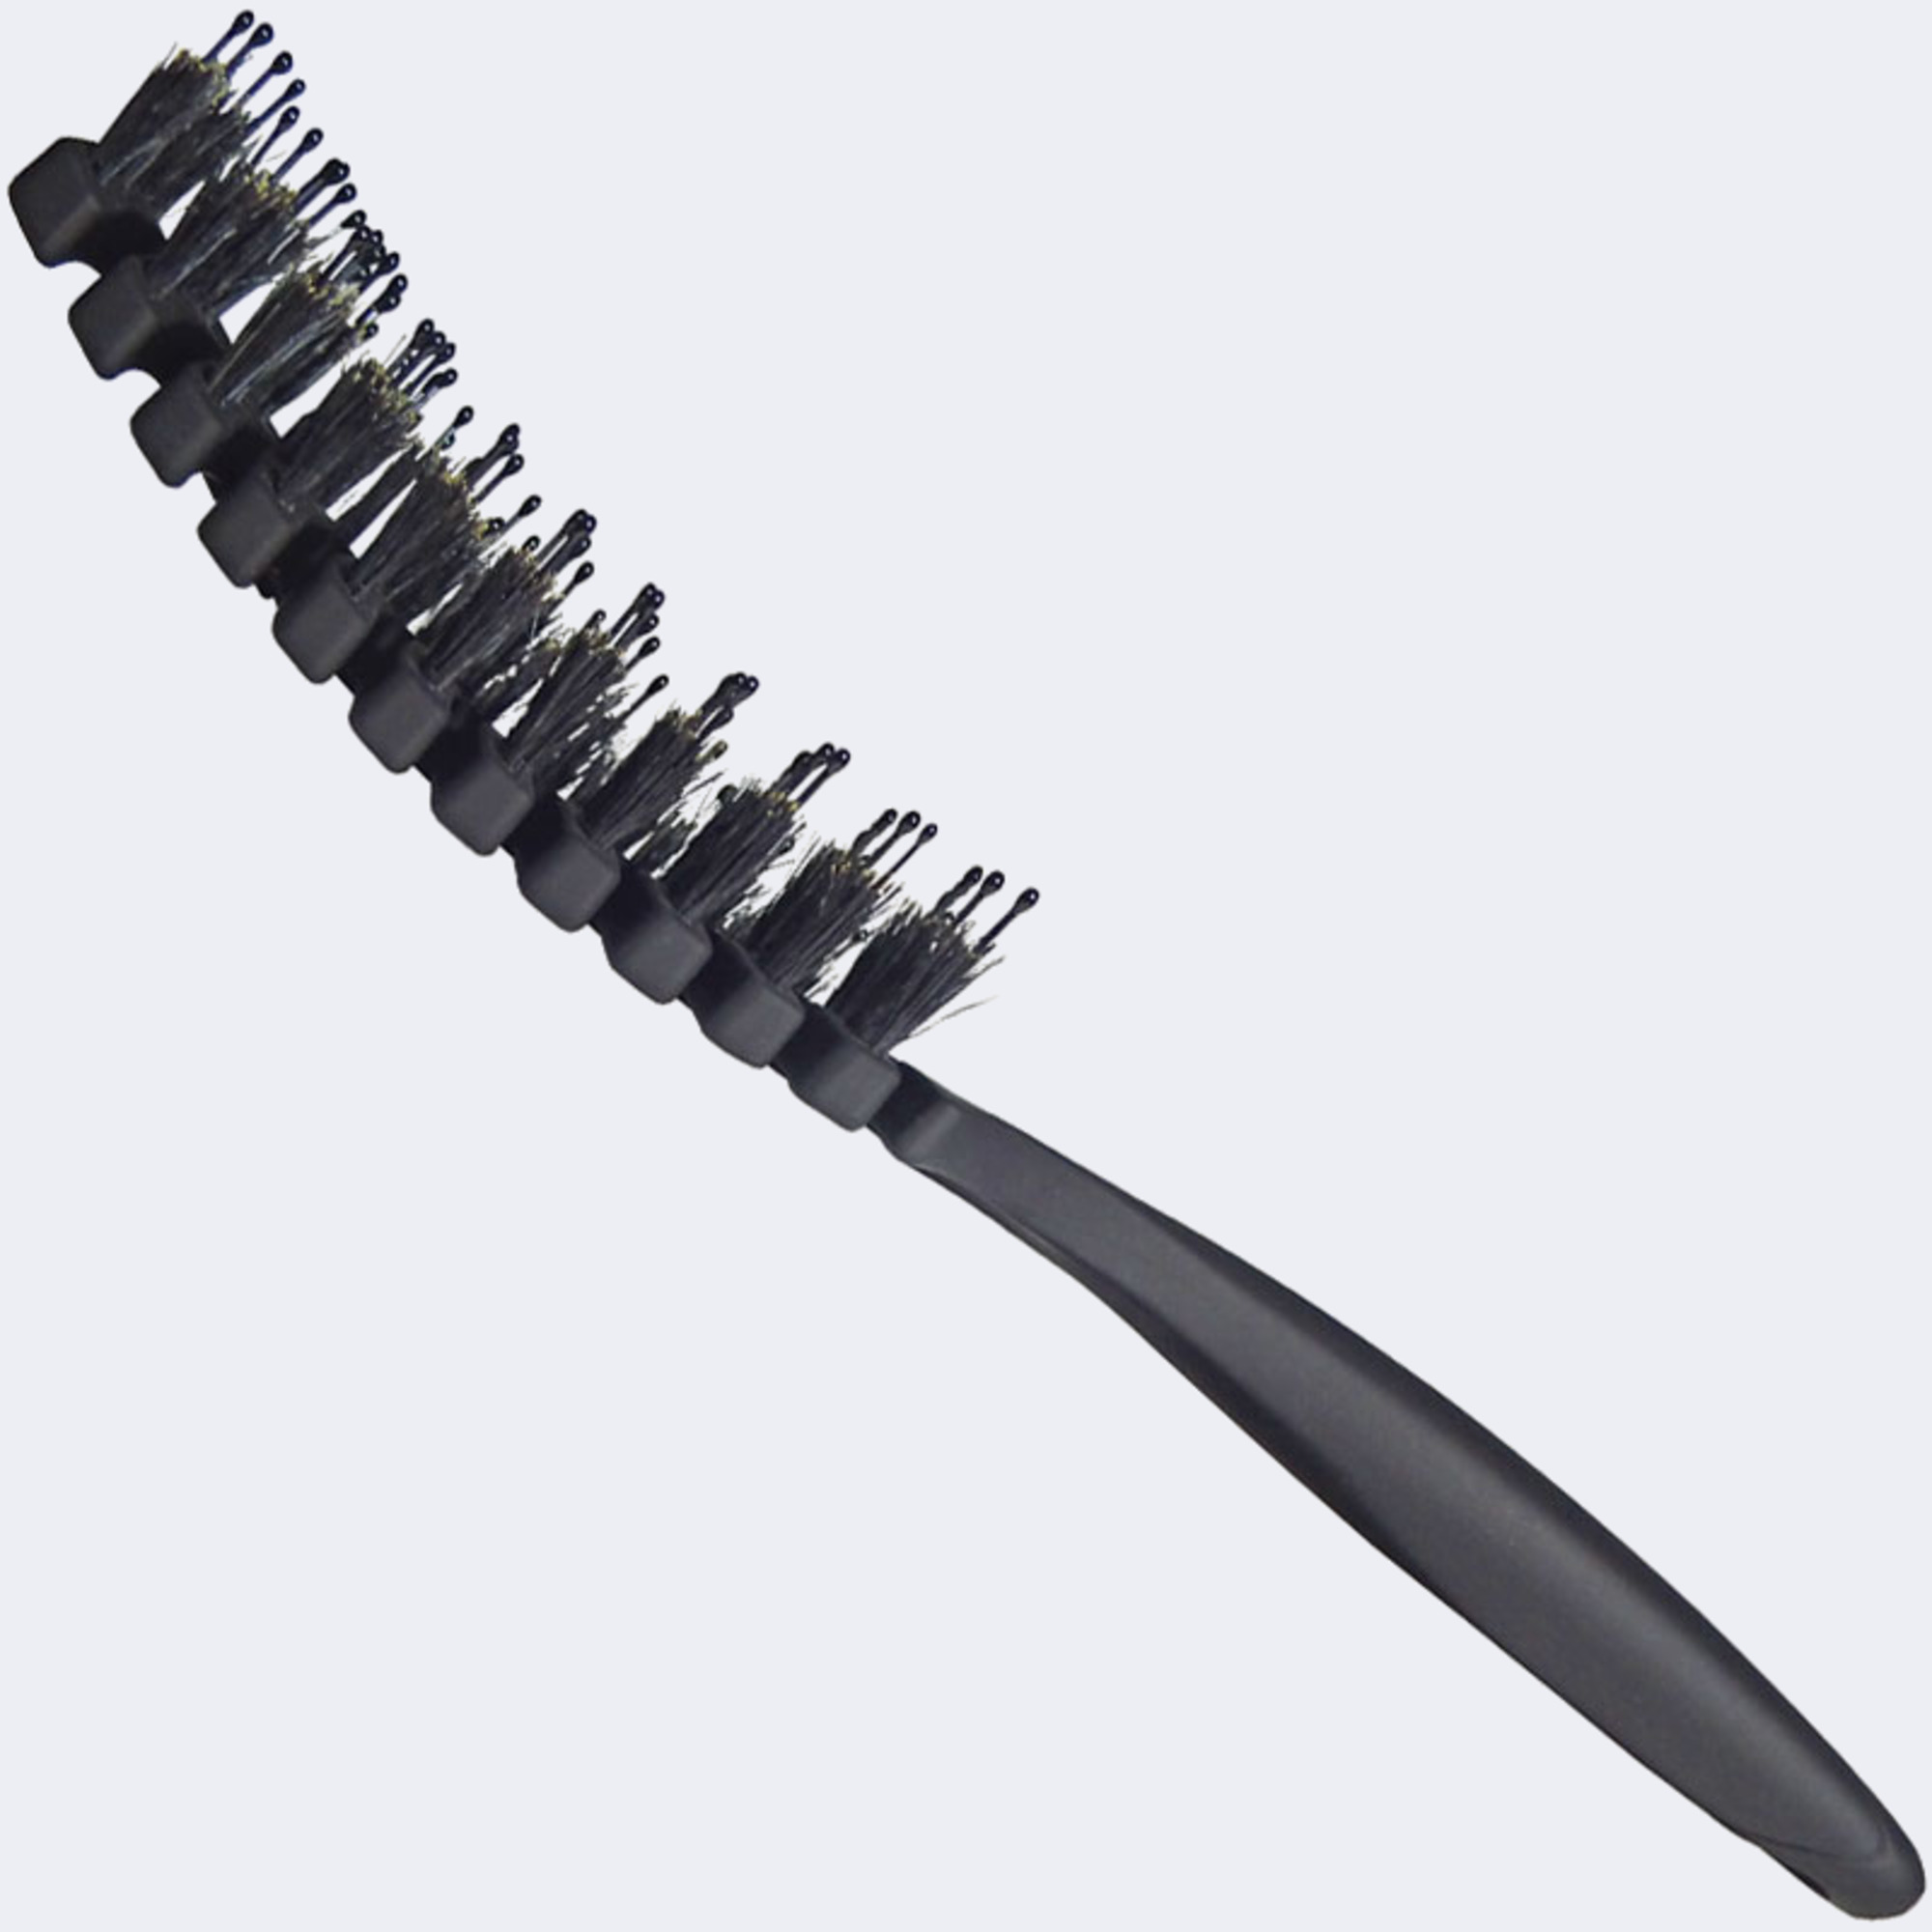 4541103 - Narrow Radiator Brush w/Horsehair-Polypropylene Bristles 24 -  Black